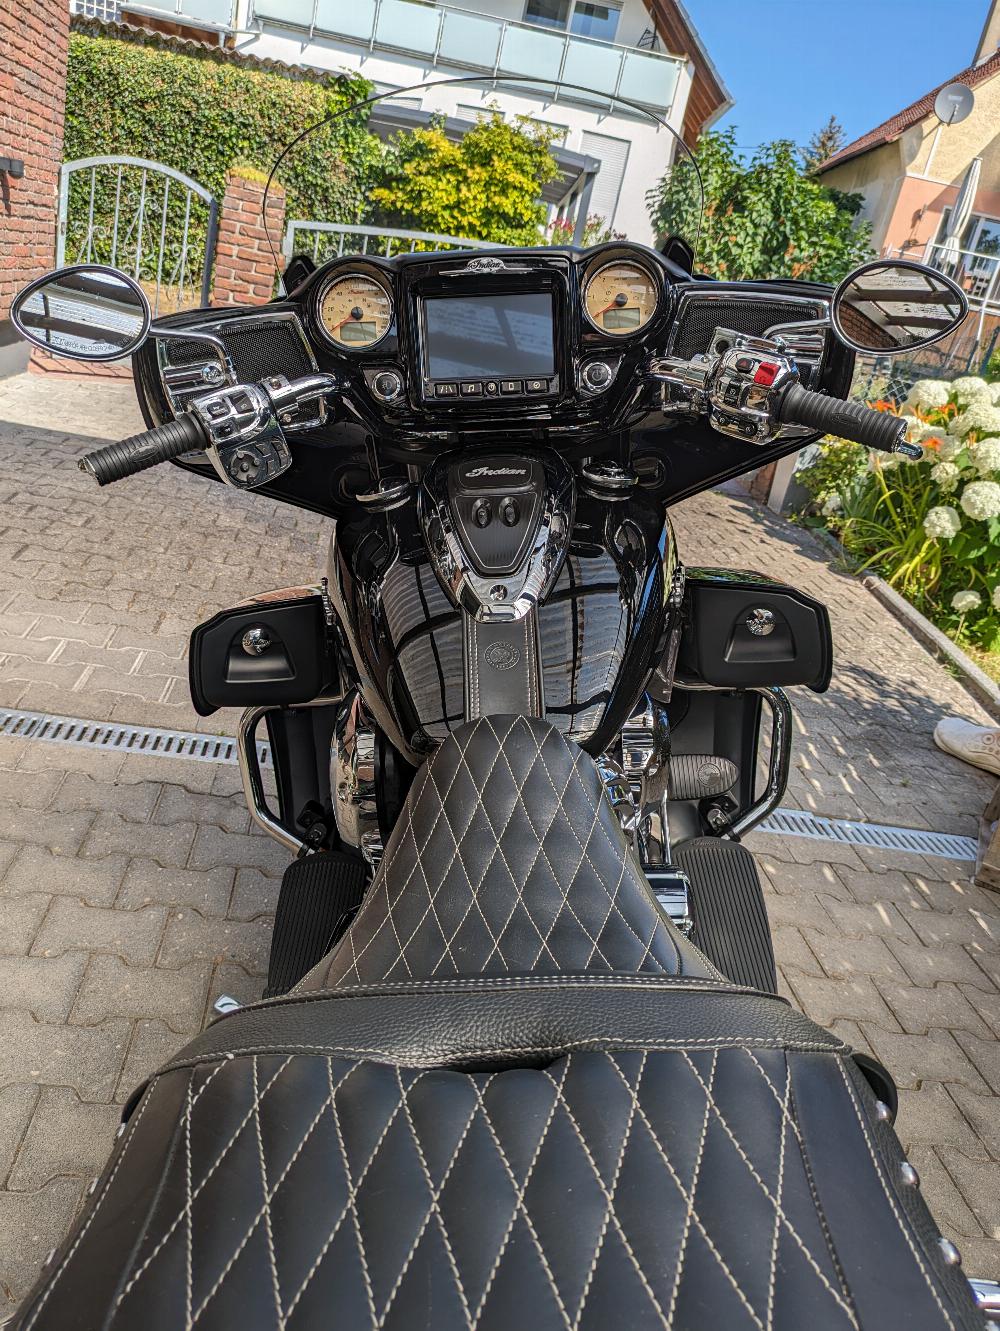 Motorrad verkaufen Indian Roadmaster Ankauf